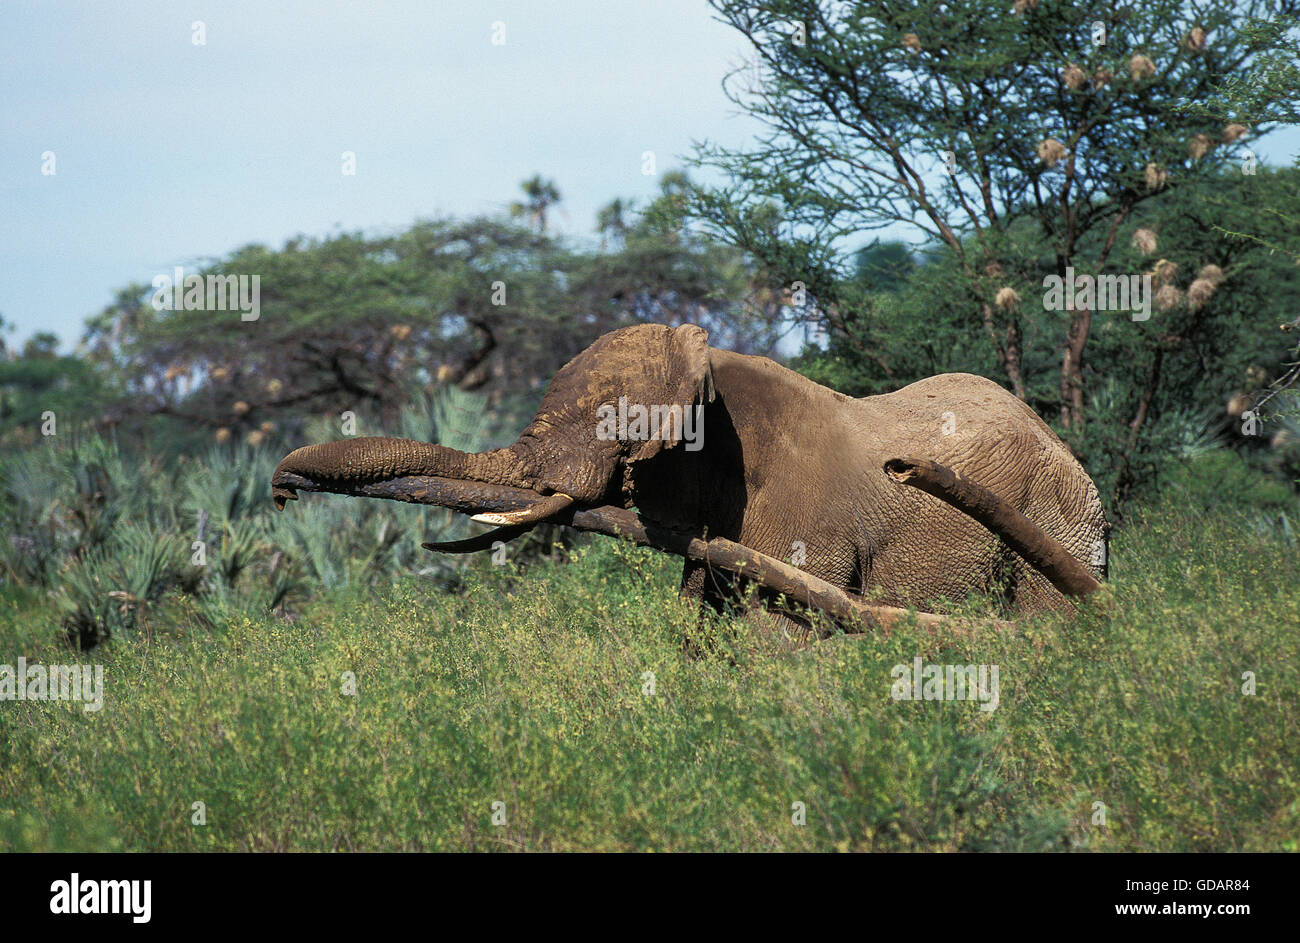 AFRICAN ELEPHANT loxodonta africana, ADULT RUBBING TREE TRUNK, KENYA Stock Photo